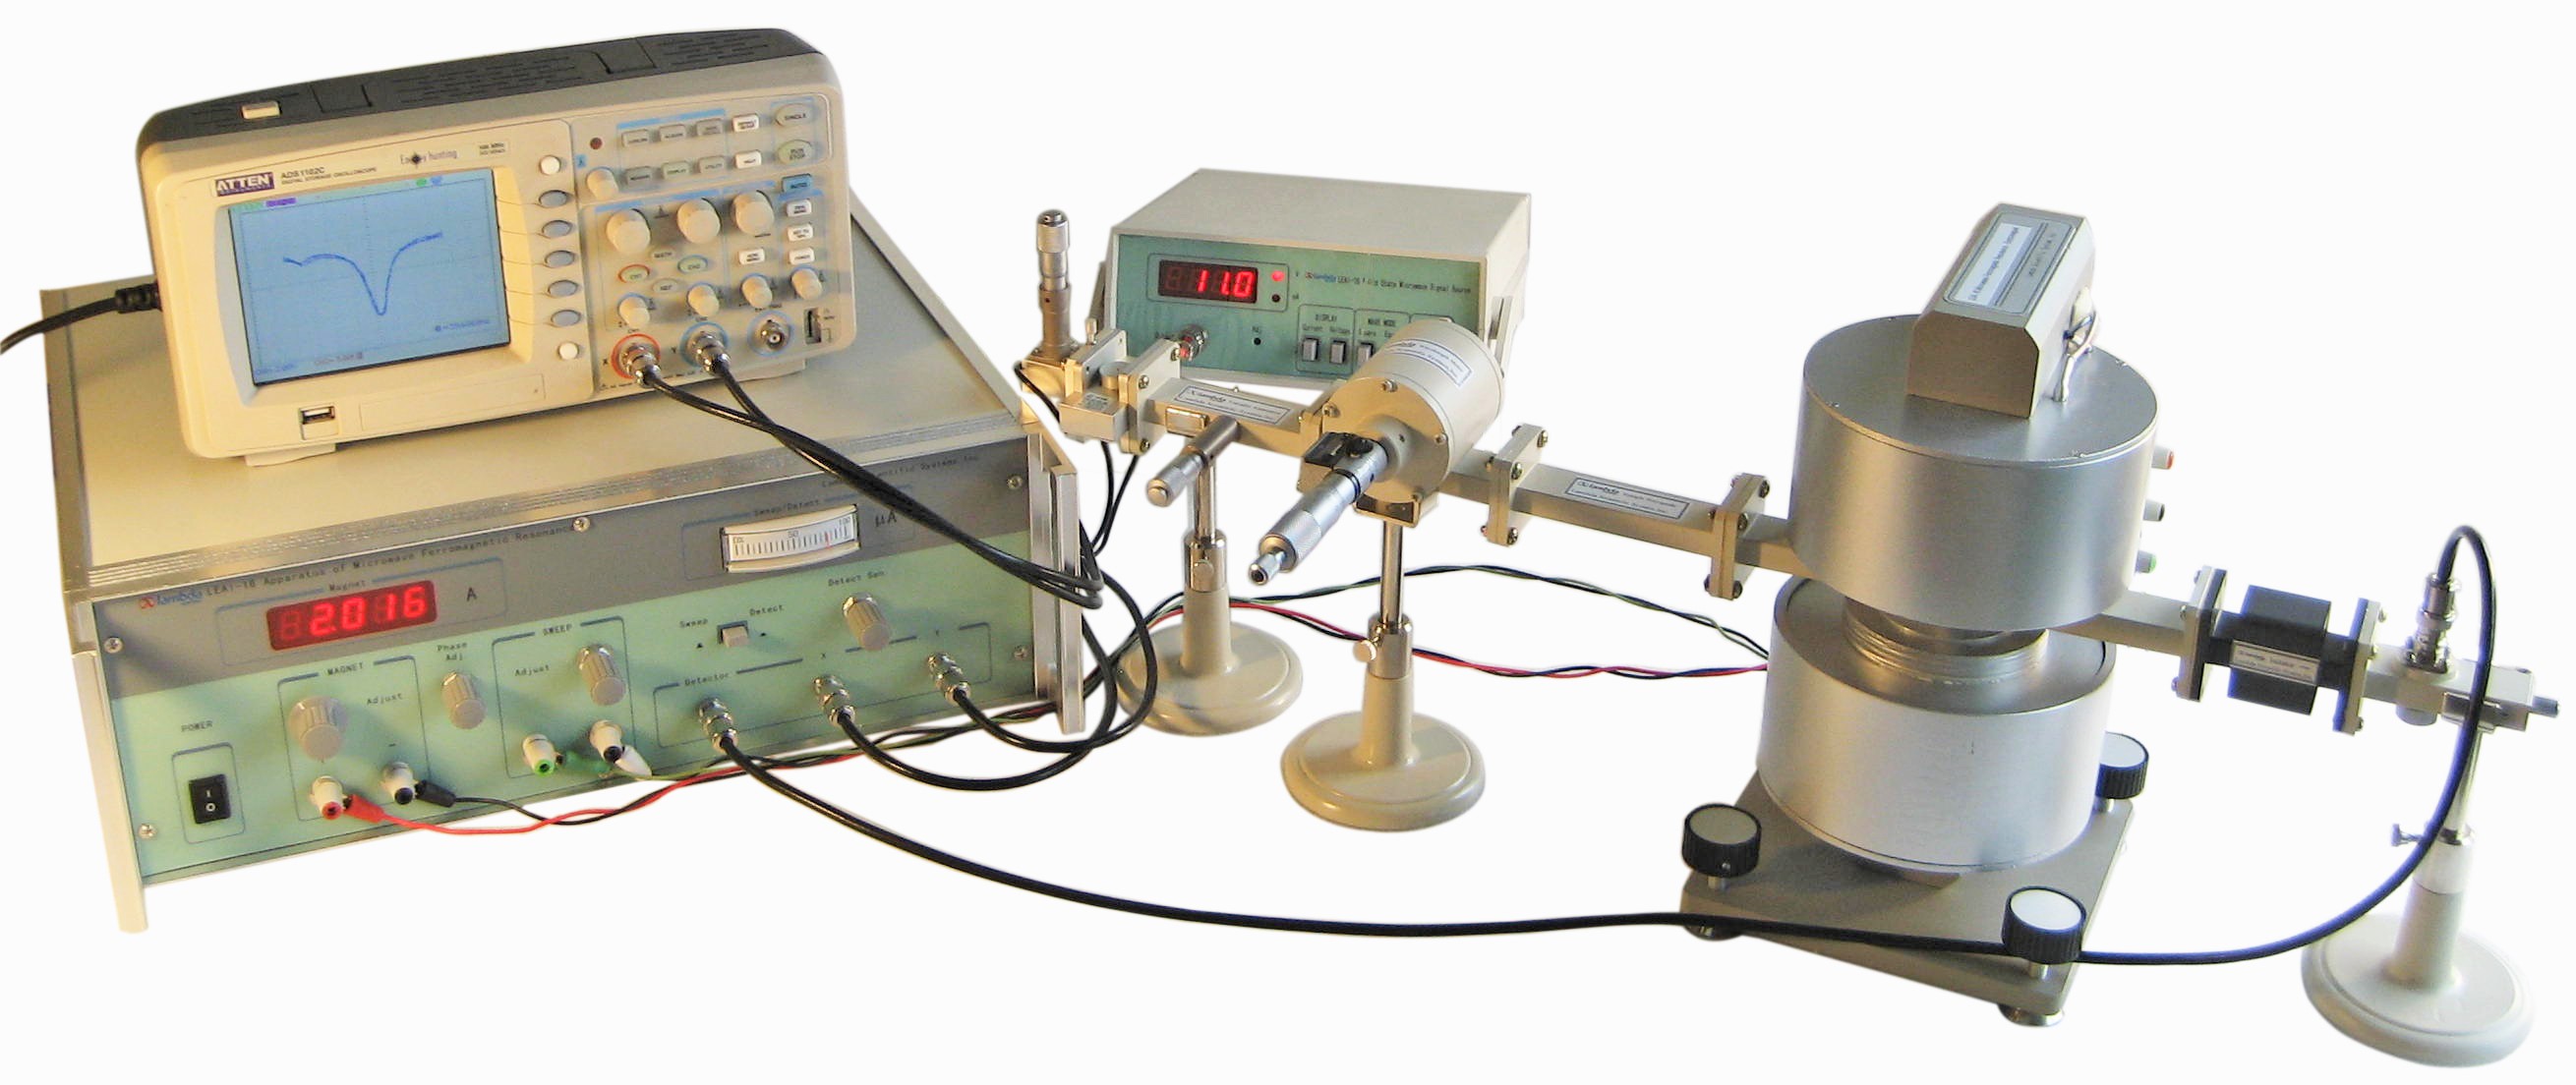 LEAI-16 Microwave Ferromagnetic Resonance Apparatus